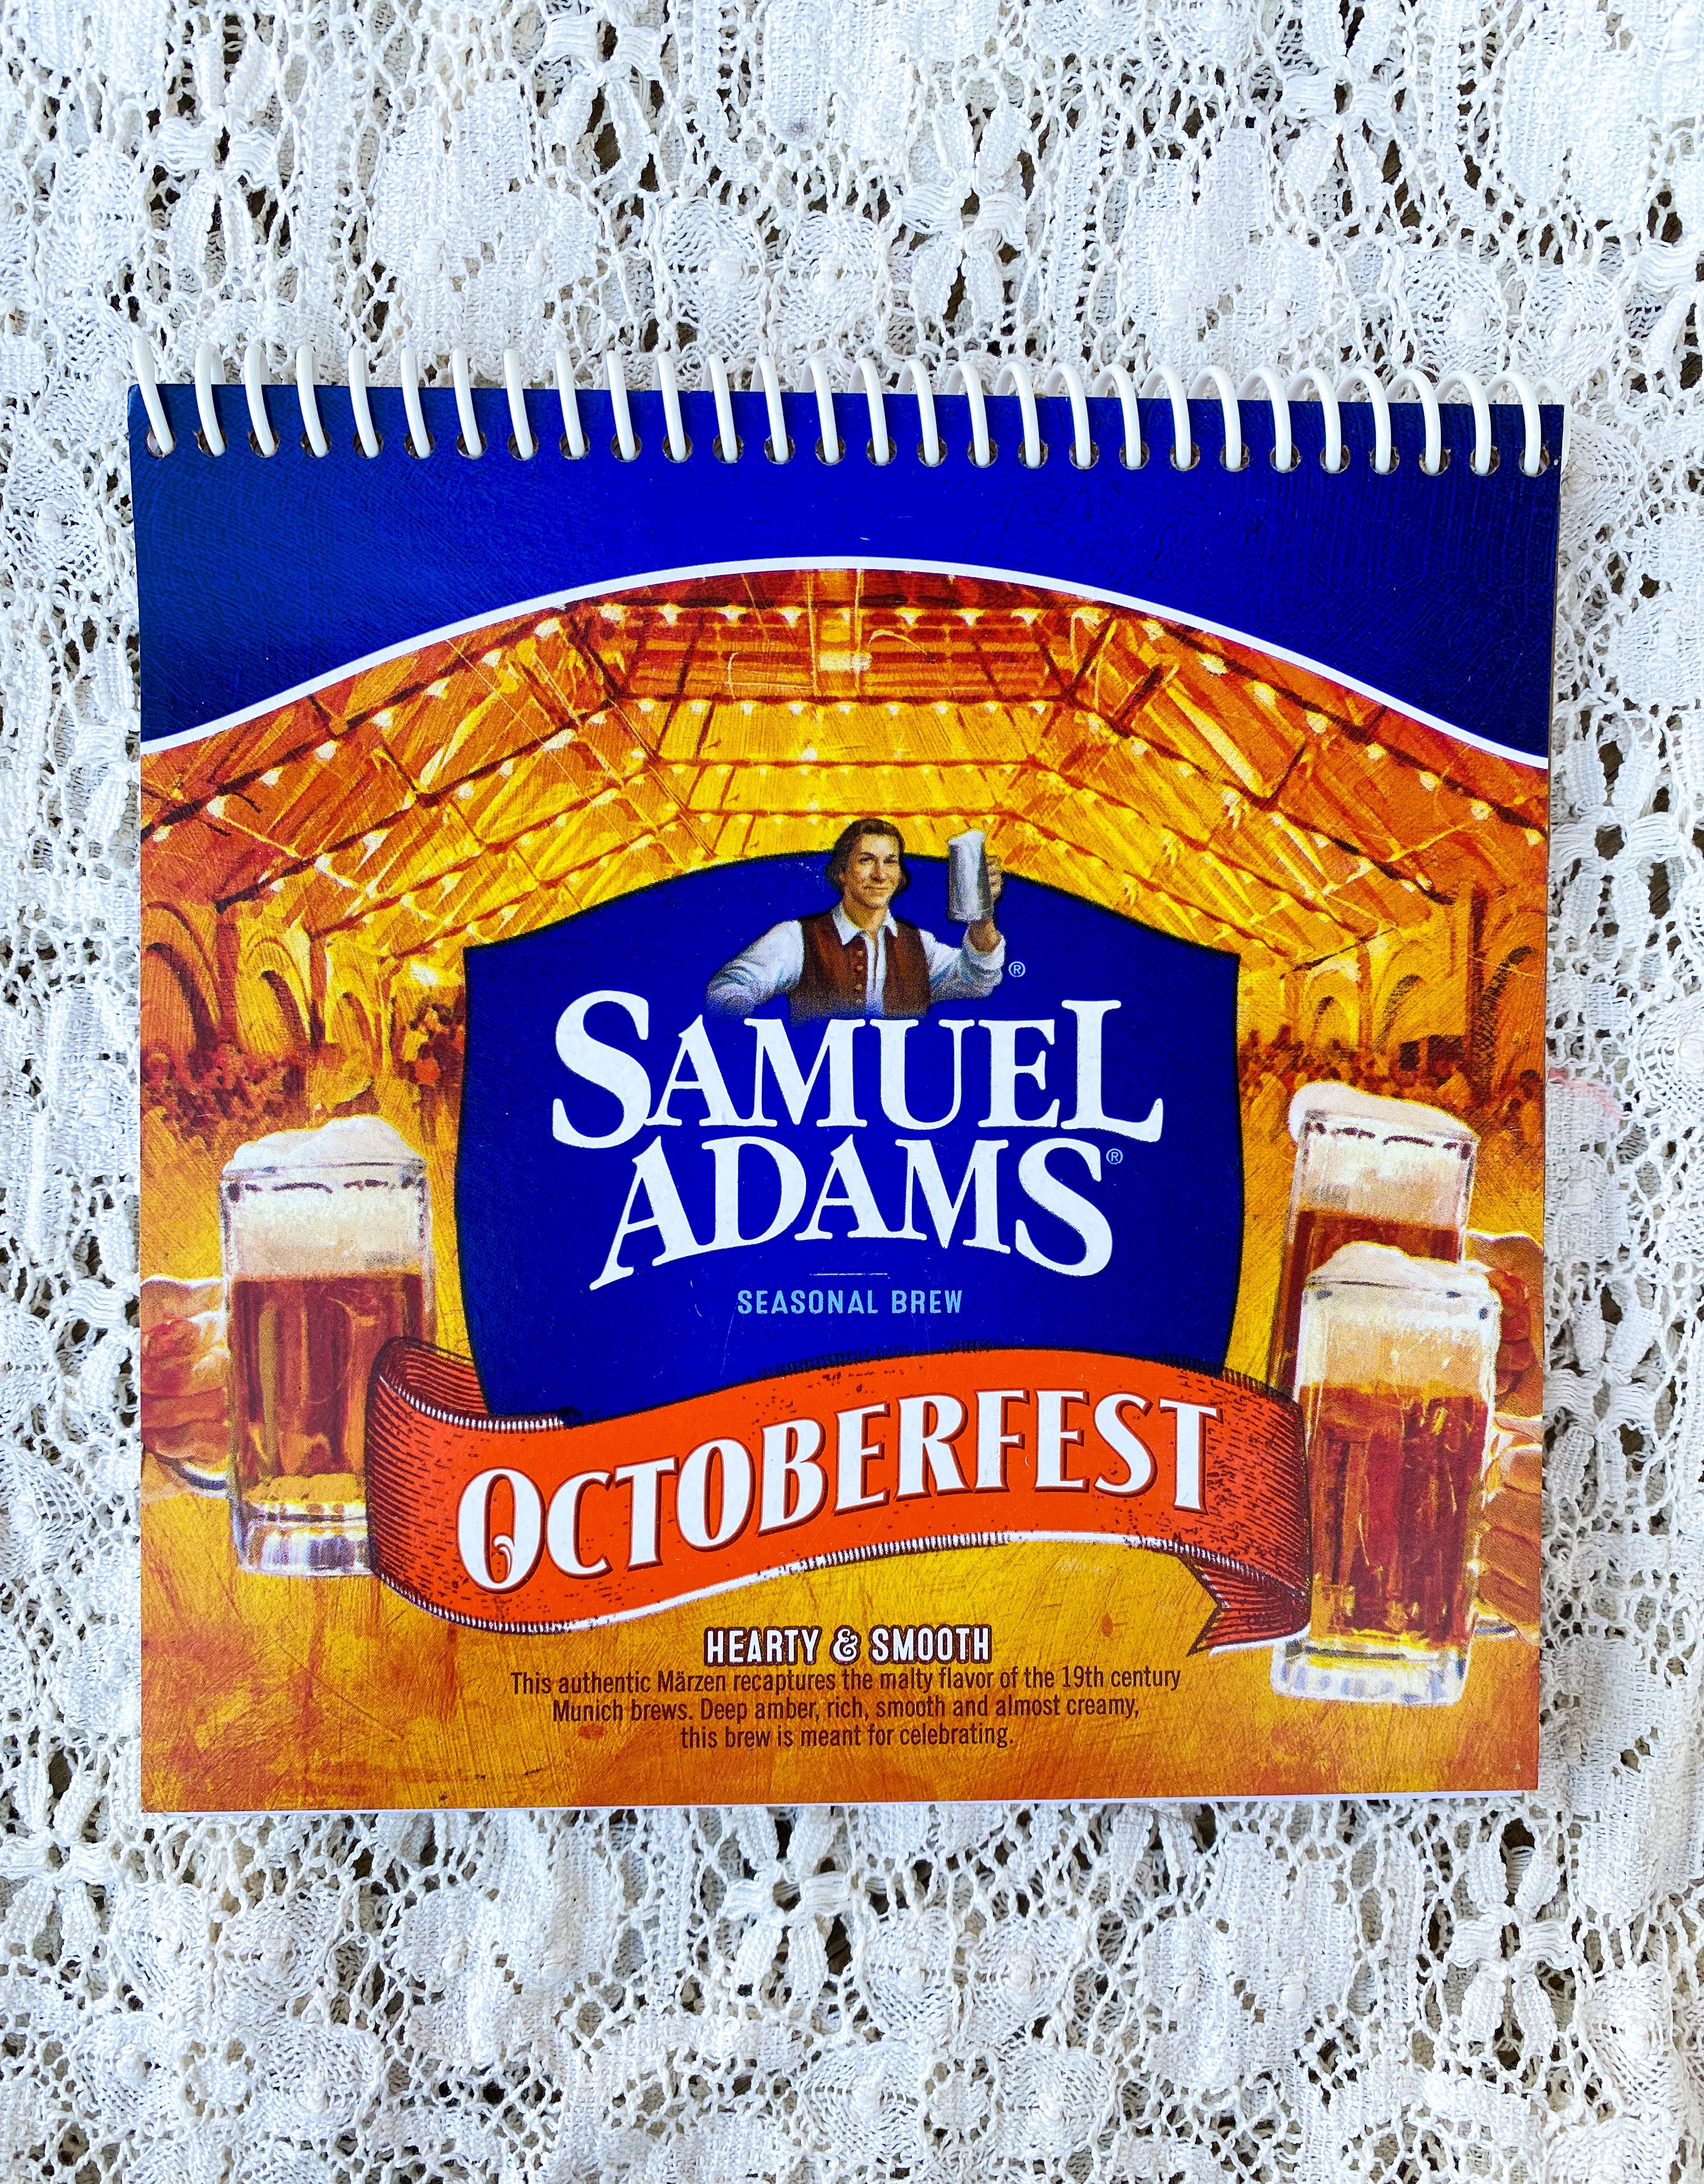 Samuel Adams Octoberfest Recycled Beer Carton Notebook